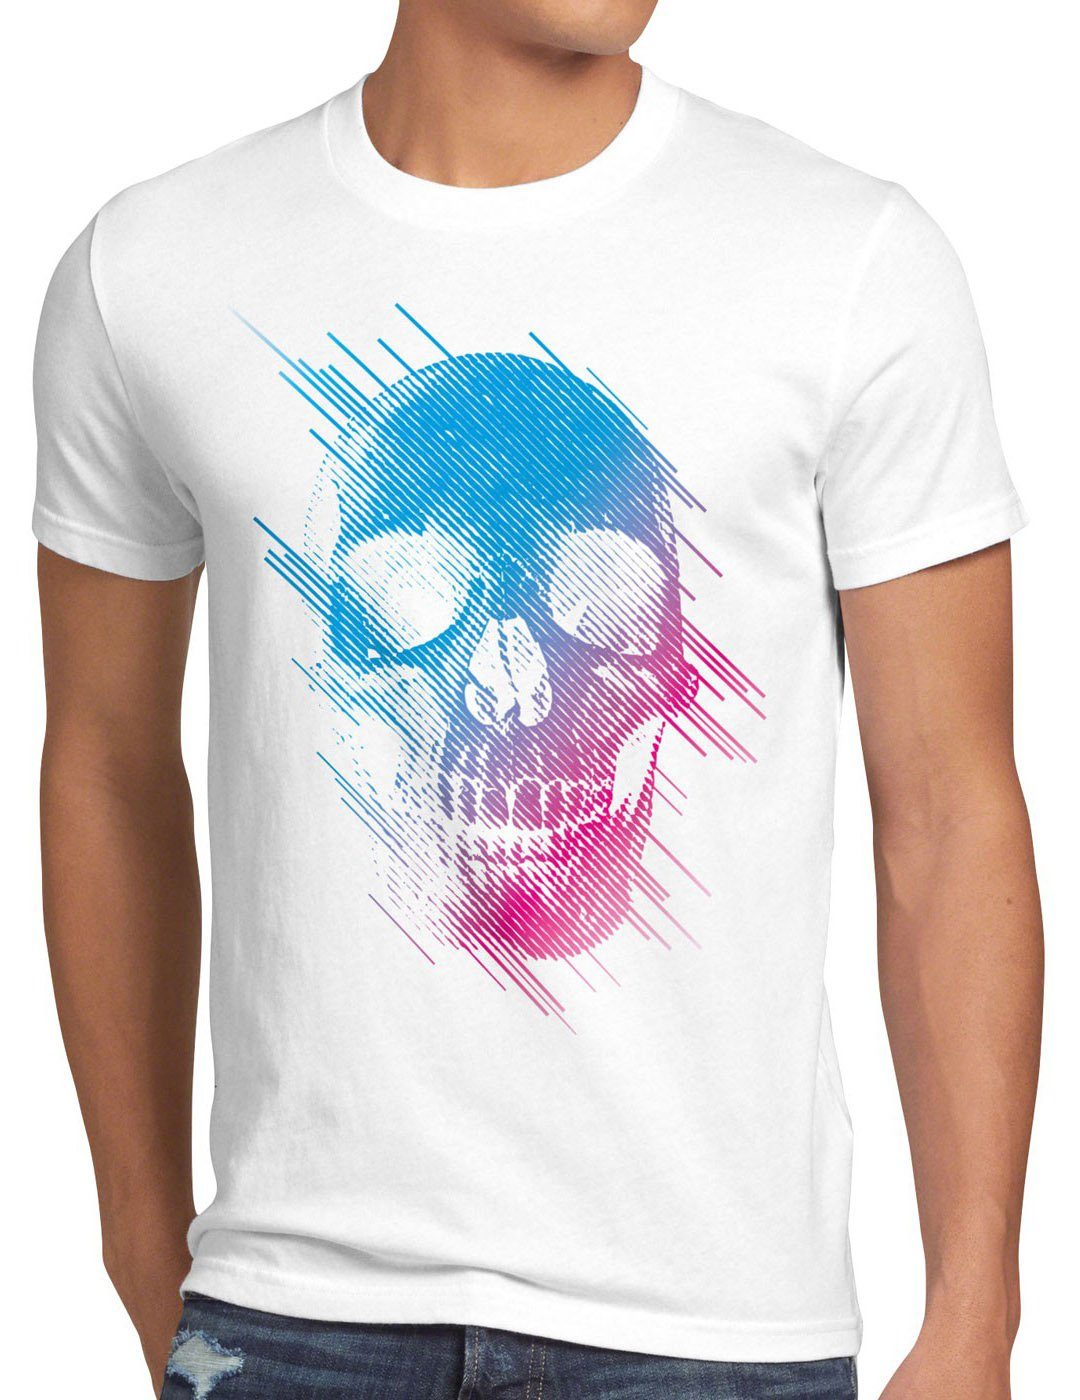 Print-Shirt weiß Herren schädel rocker punk totenkopf style3 T-Shirt Neon hipster tattoo Skull festival